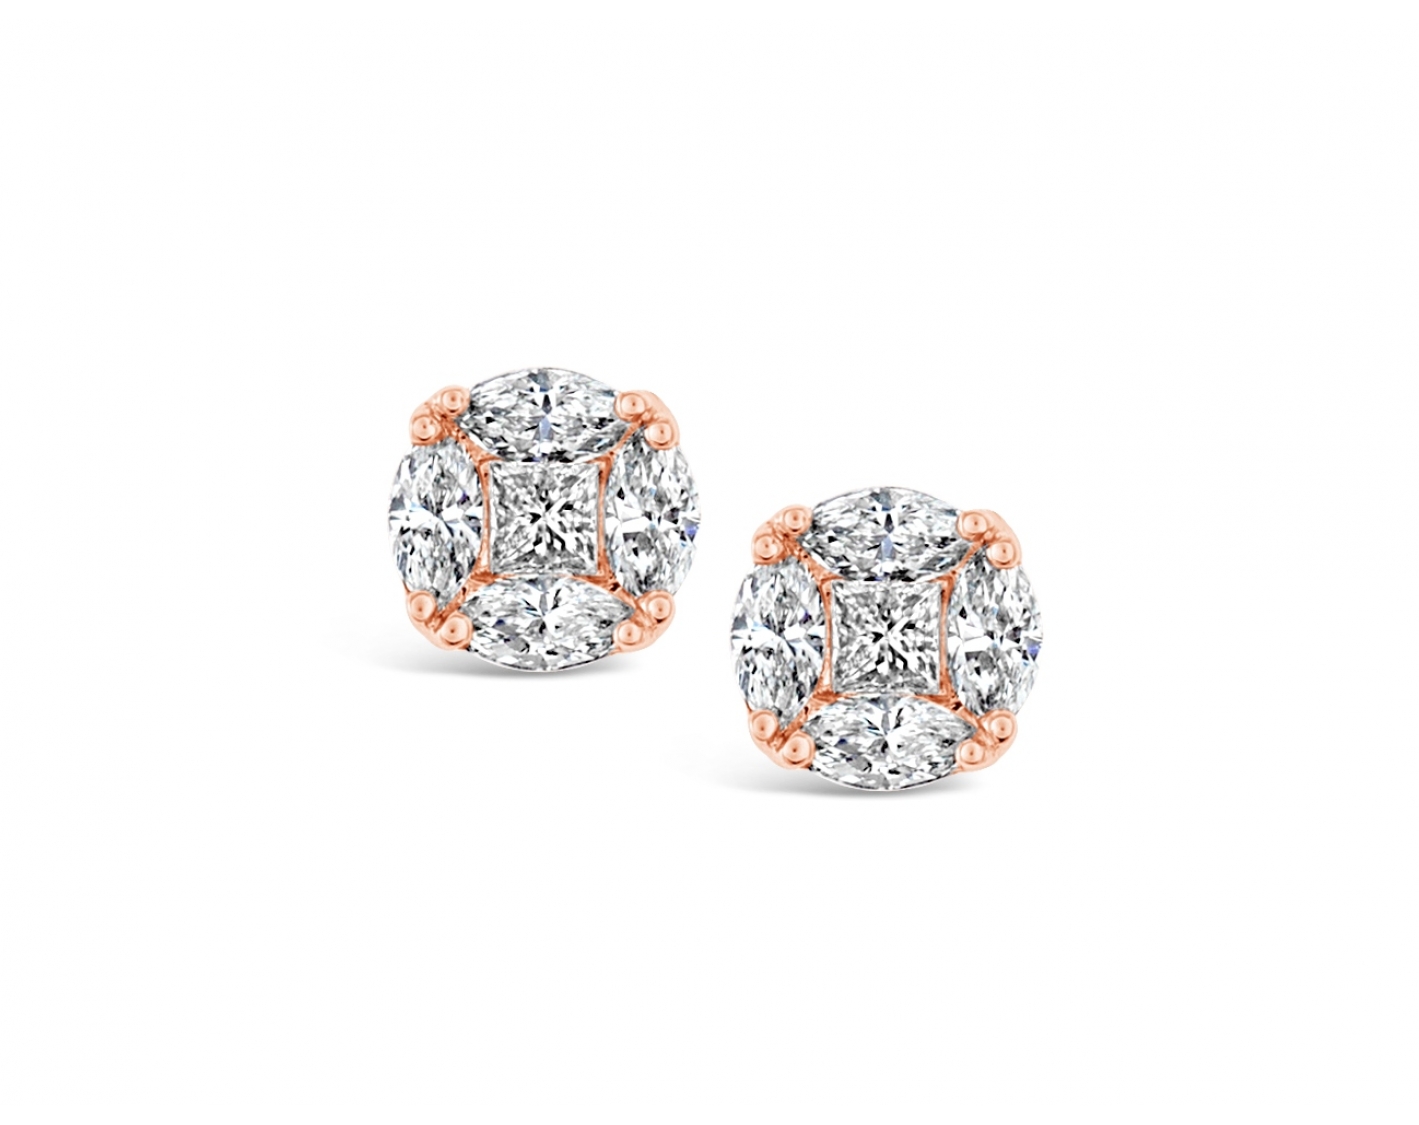 18k rose gold illusion set stud earrings with princess & marquises diamonds